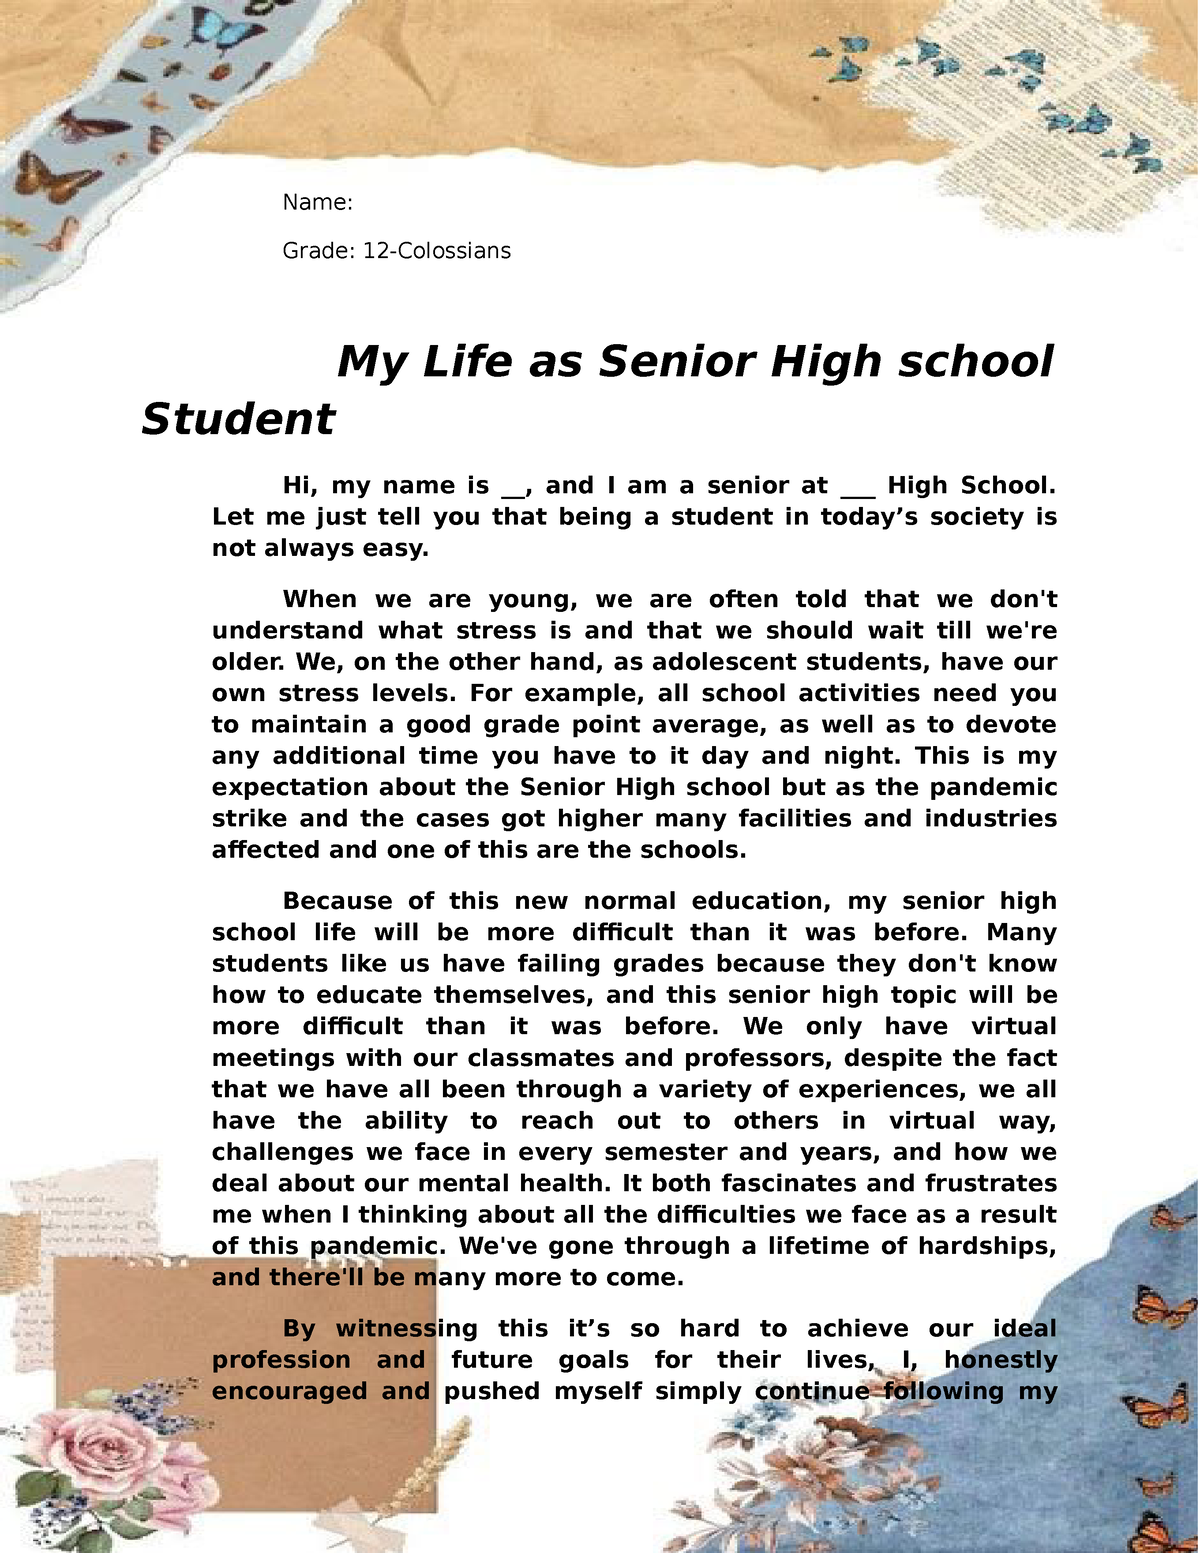 500 word essay about senior high school strand